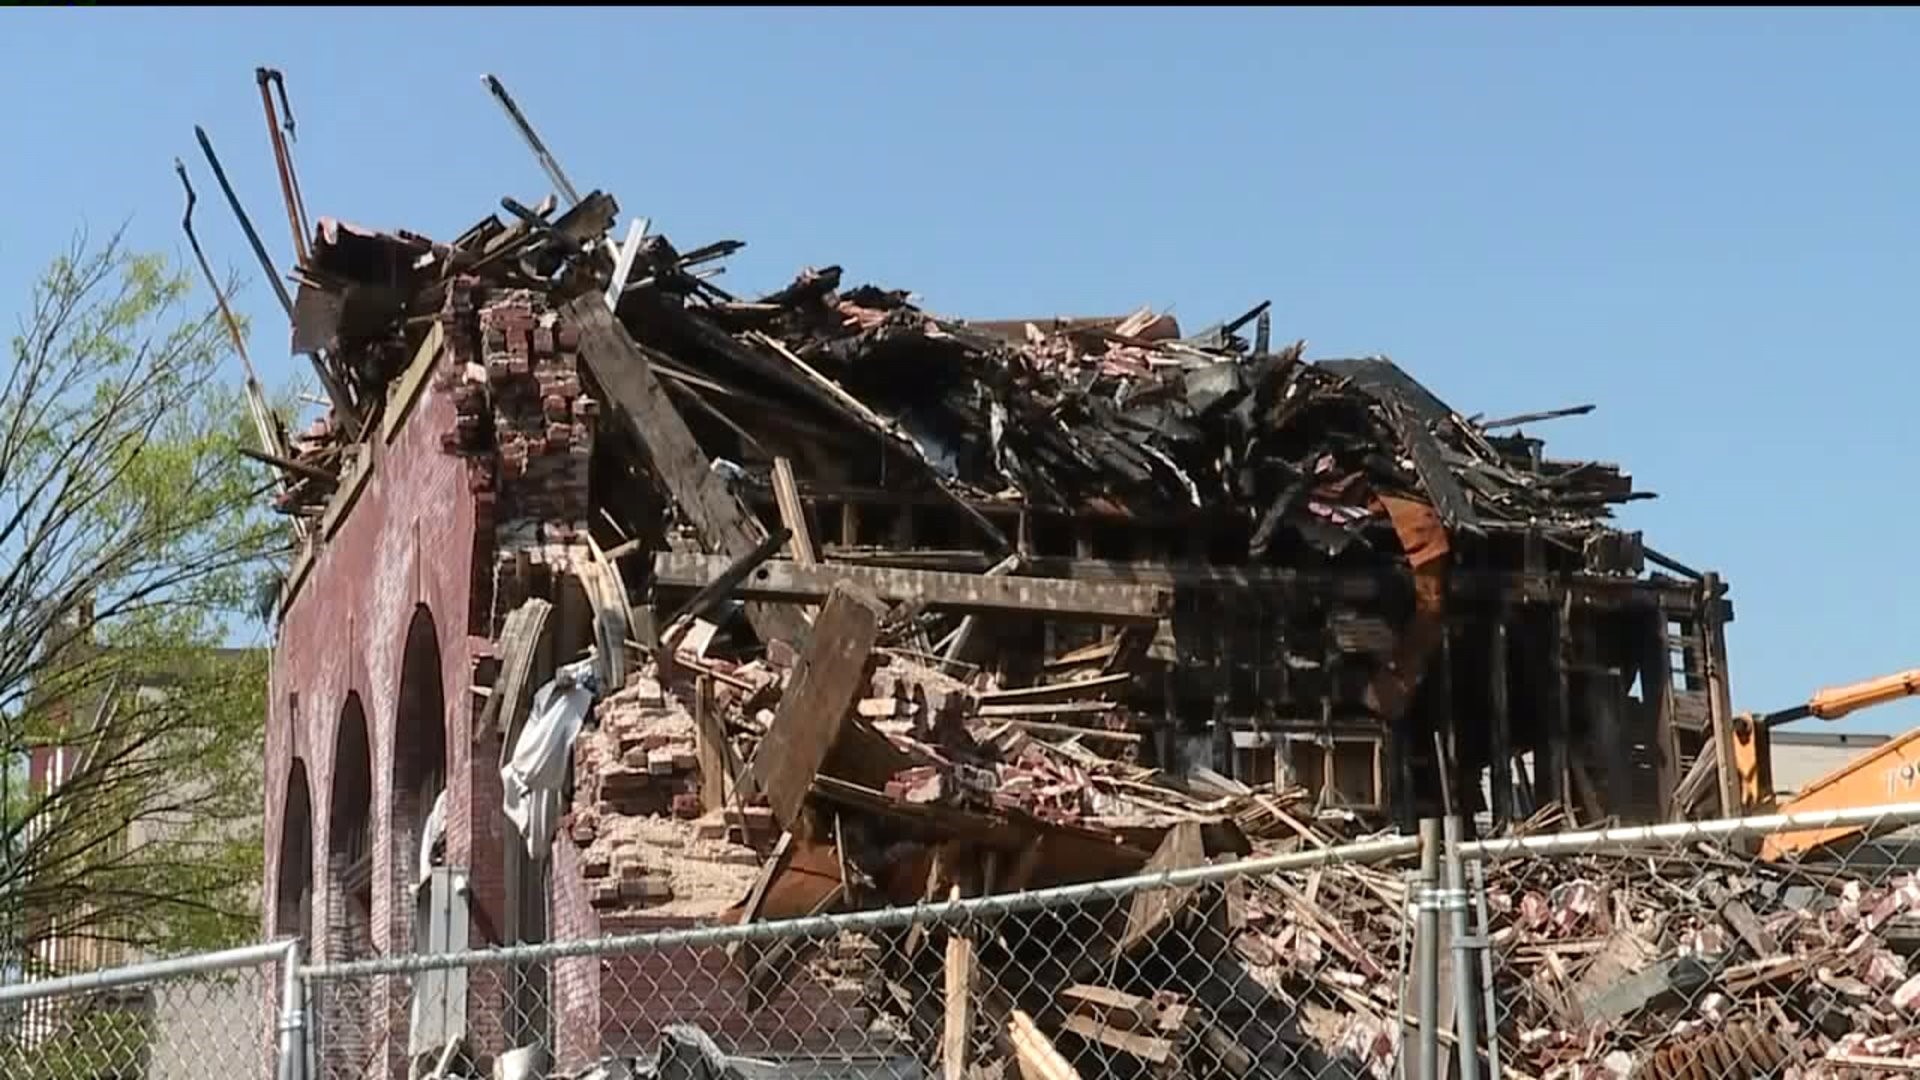 Demolition of Fire-Gutted Ruins of Masonic Lodge in Shamokin